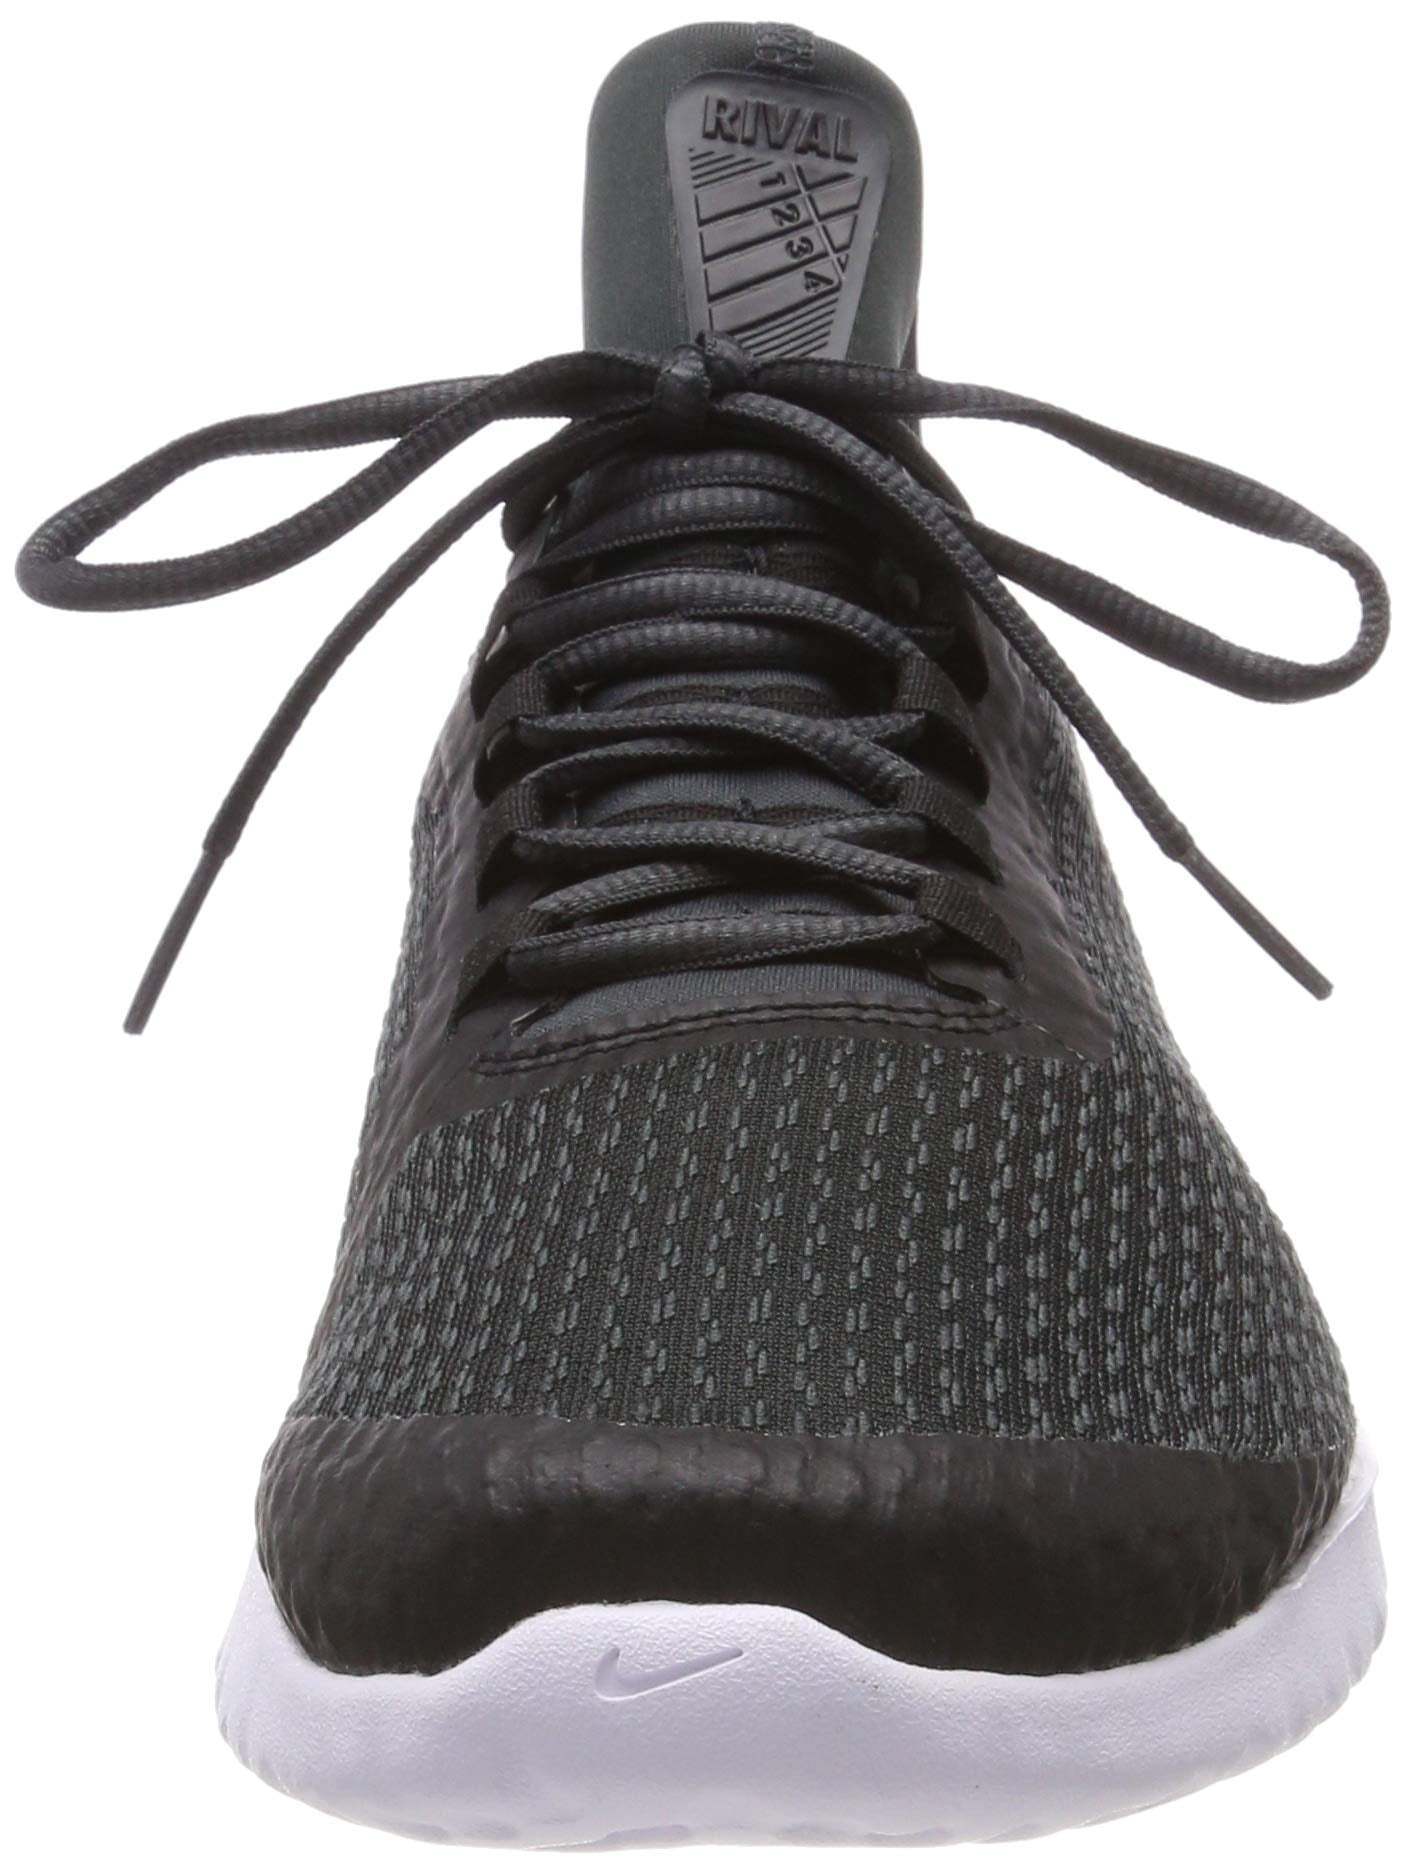 Nike Rival Running Shoes (13 M US, Black White - Walmart.com